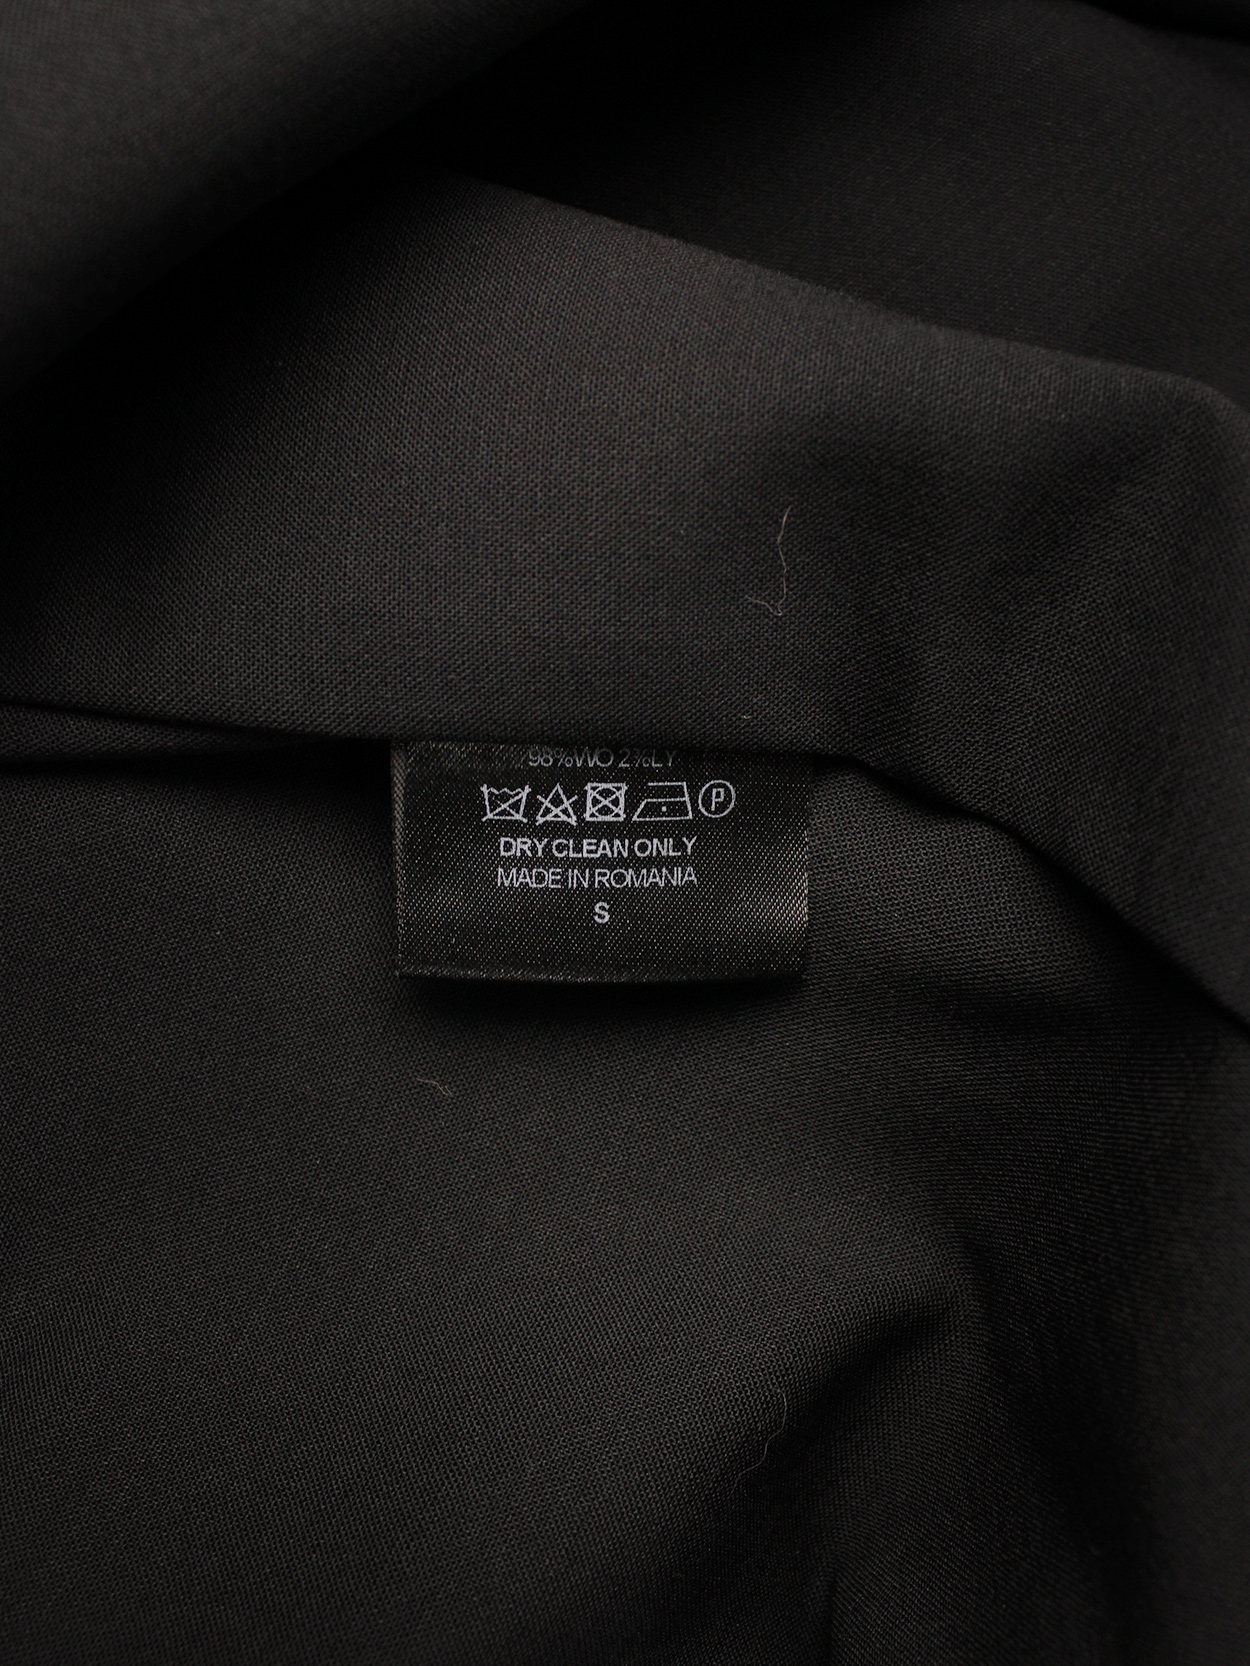 A.F. Vandevorst black asymmetric coat with draped volume - V A N II T A S